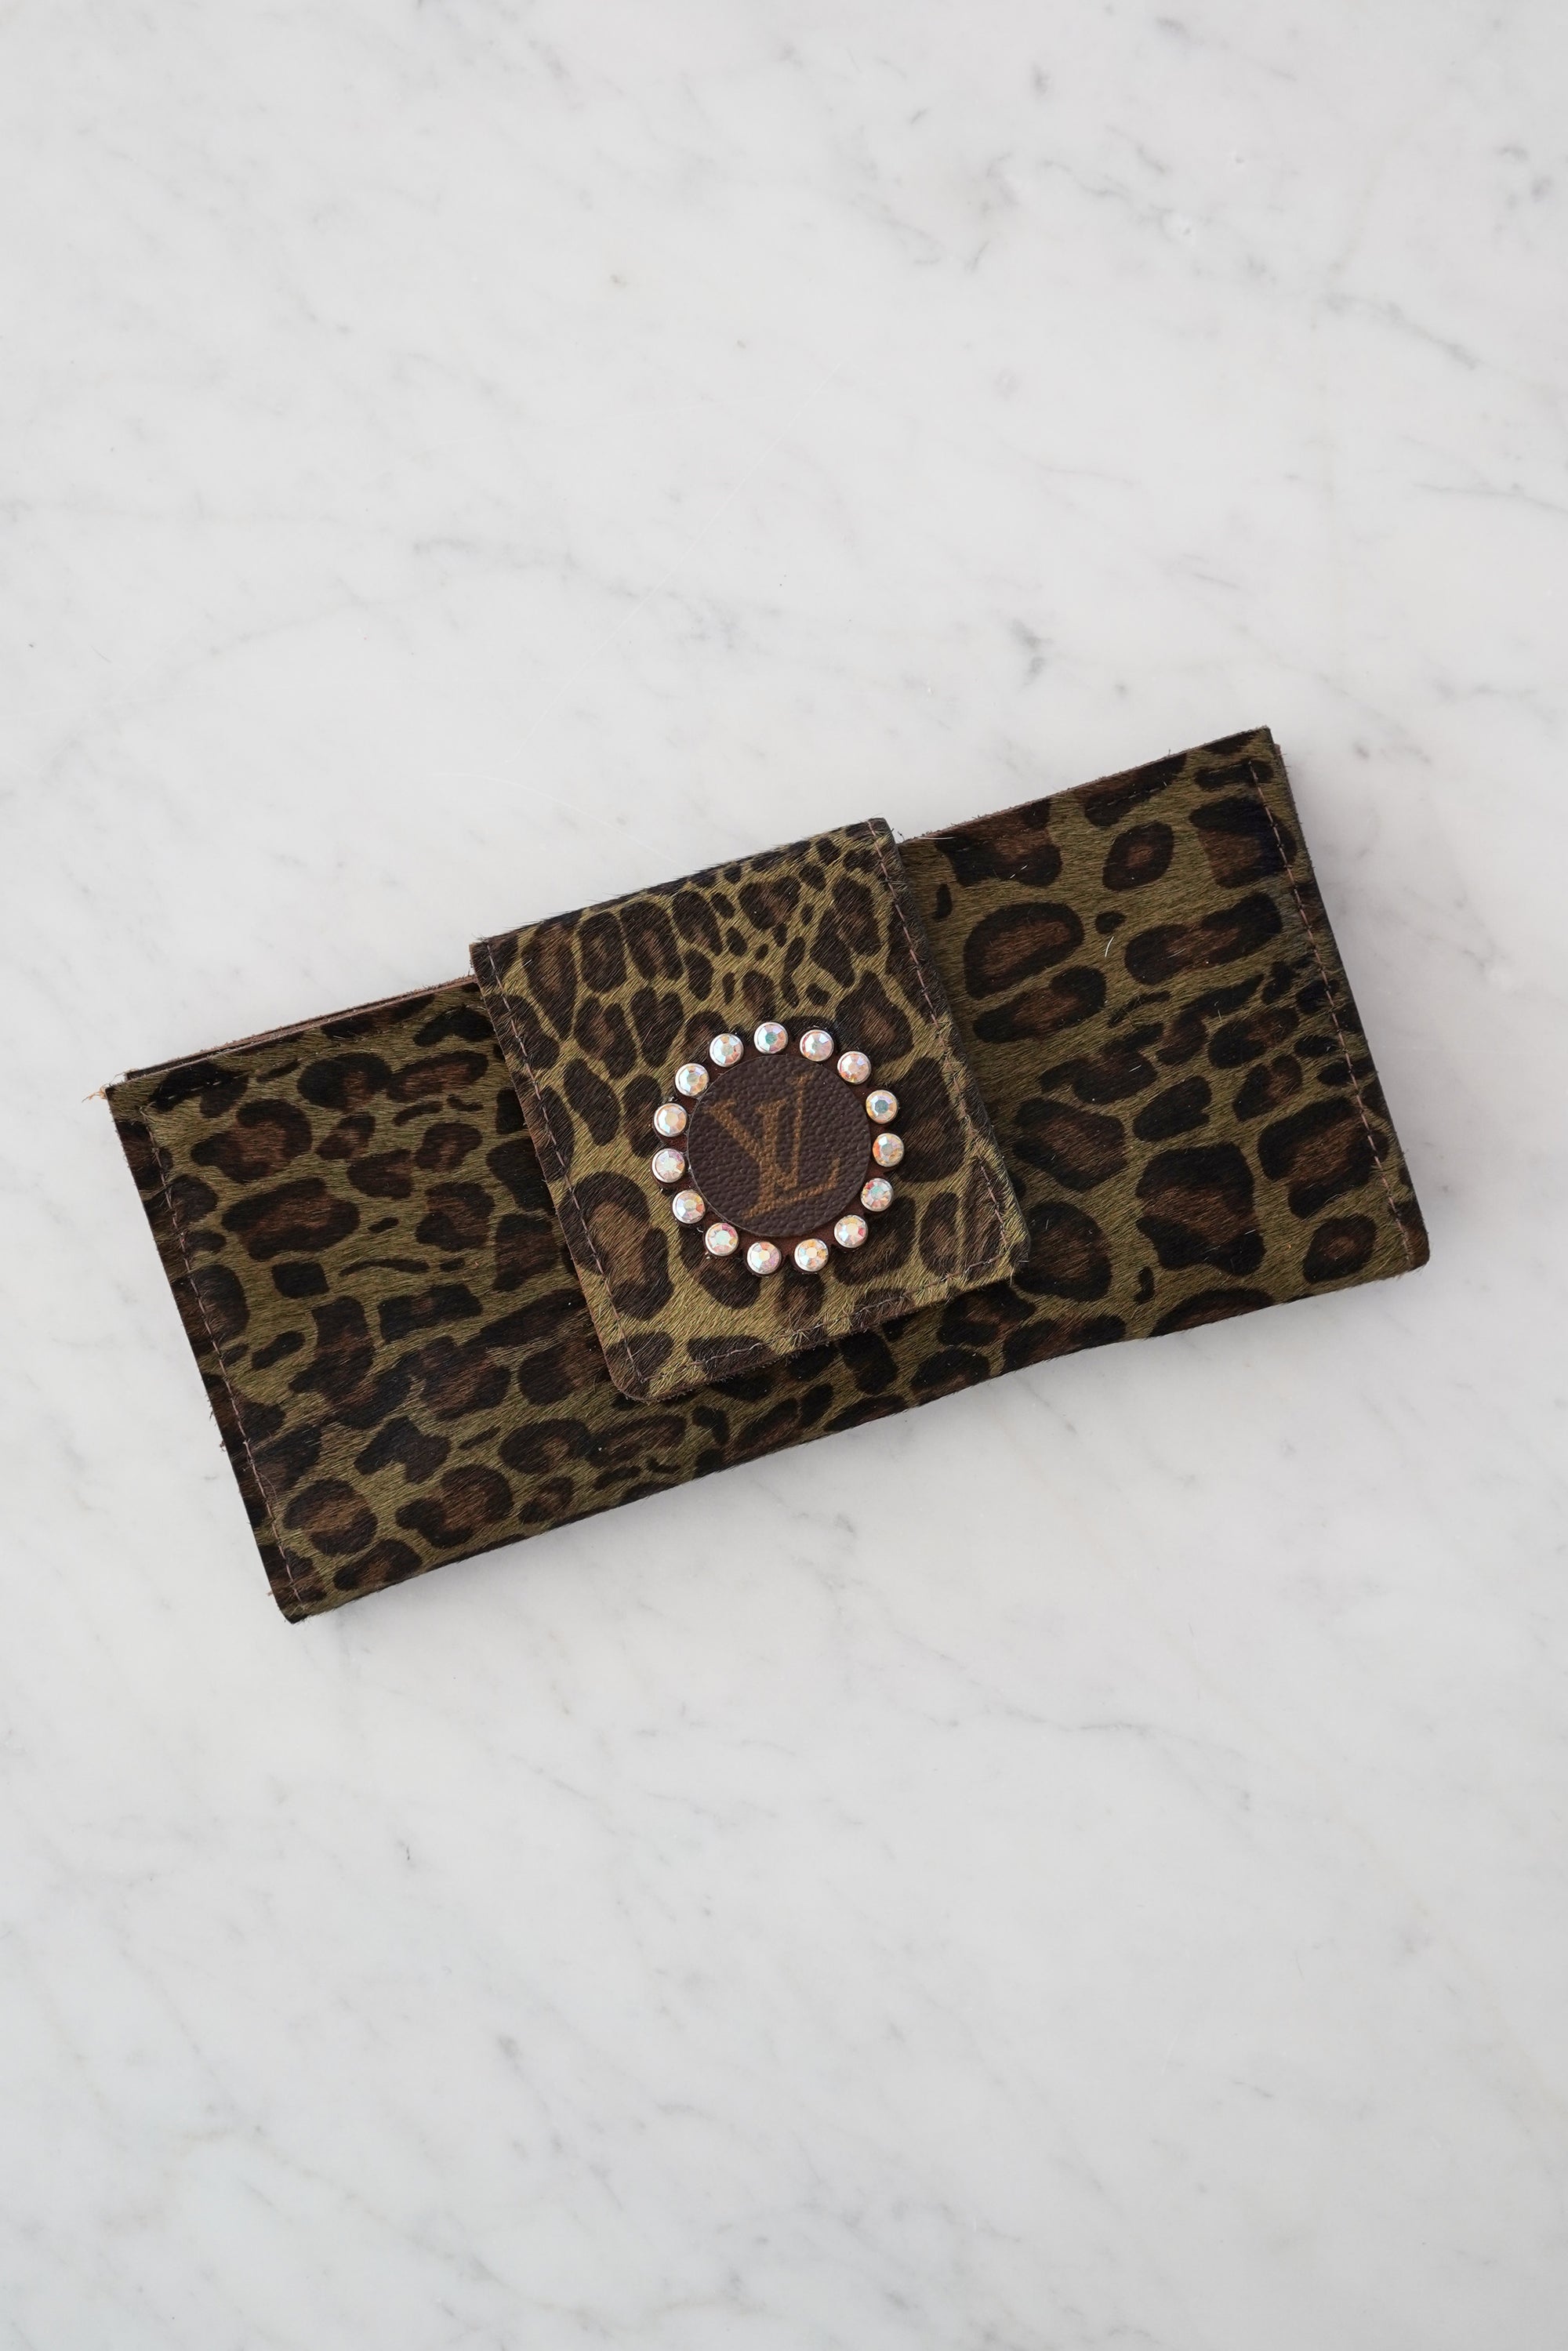 Jungle LVOE Monogram Clutch Wallet - The Flaunt